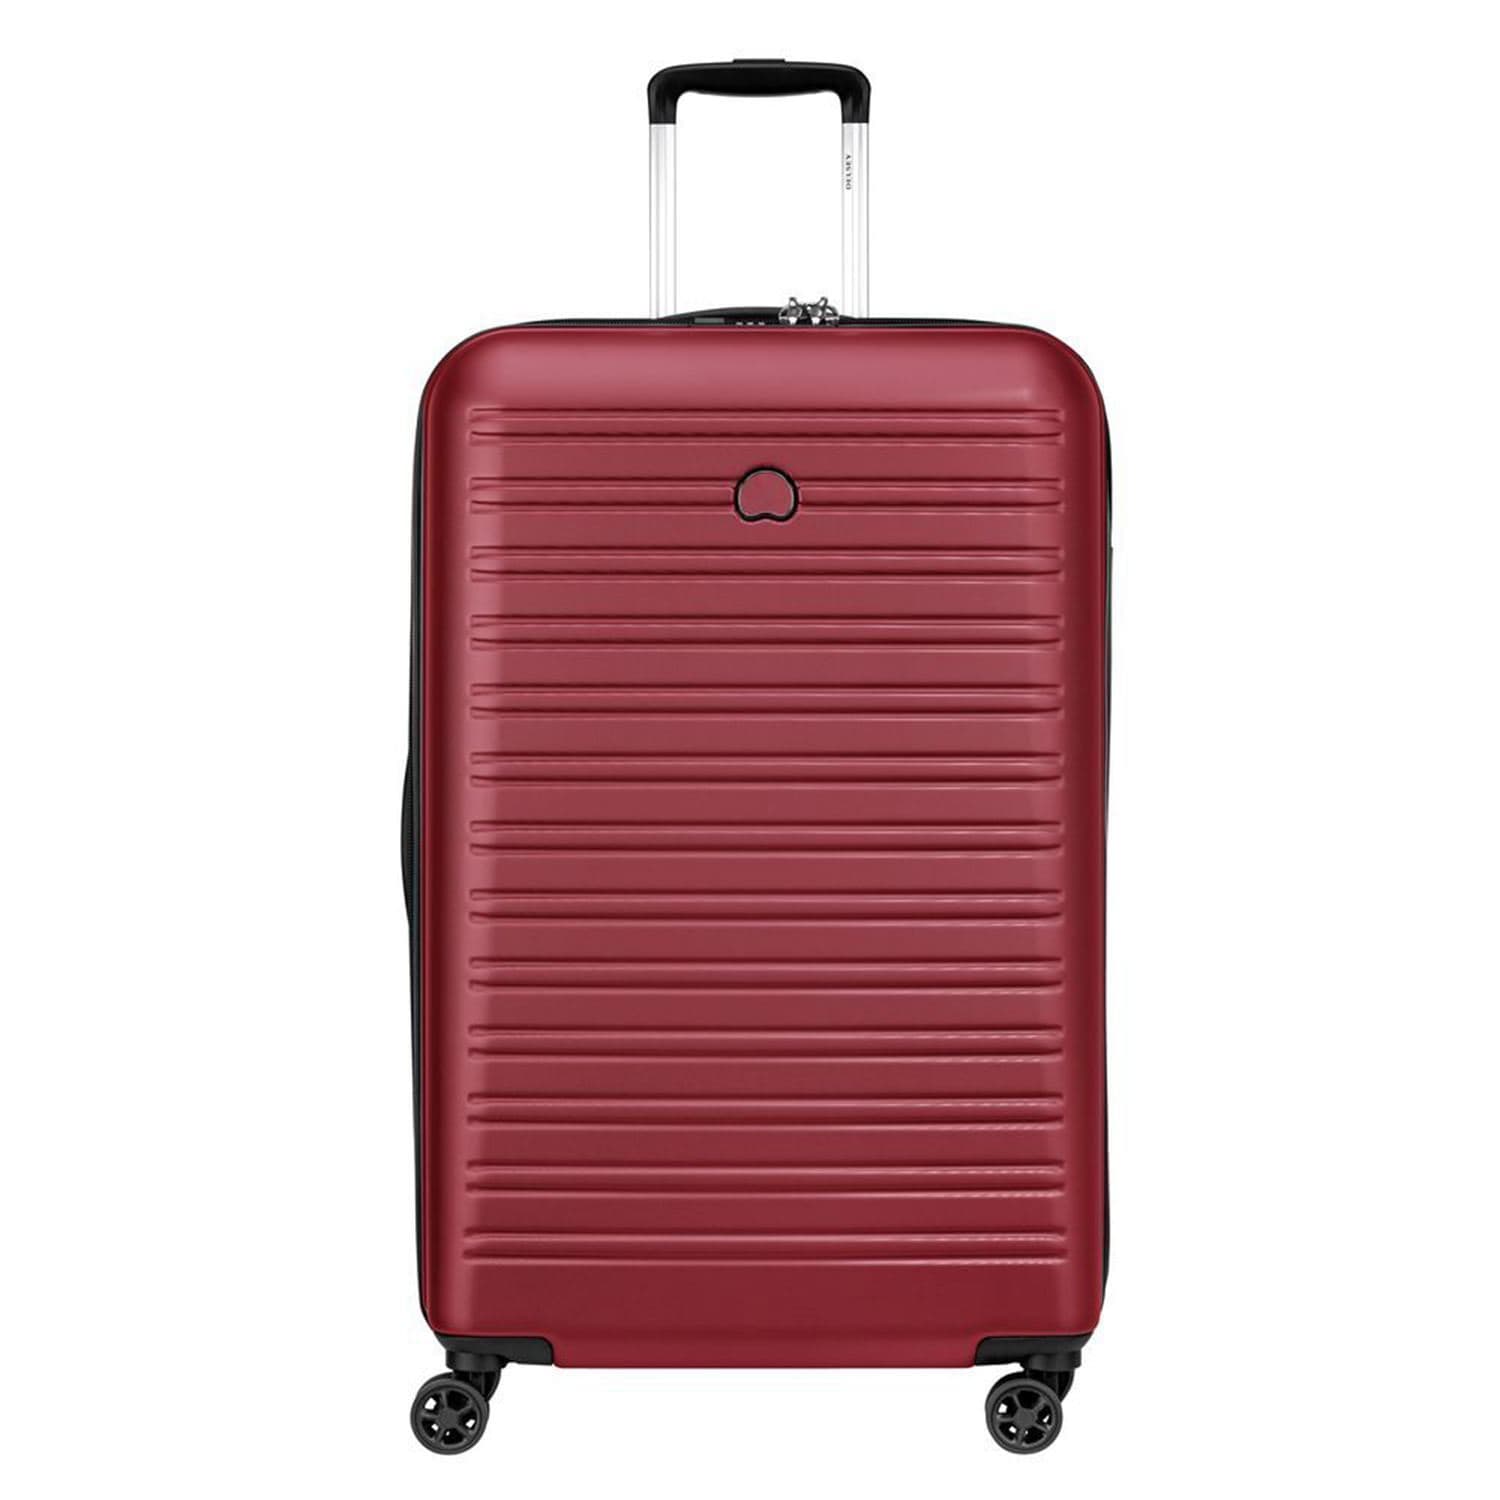 Delsey Segur 2.0 4 حقيبة عربة مزدوجة العجلات - أحمر، 78 سم - 00205882104 RED - Jashanmal Home